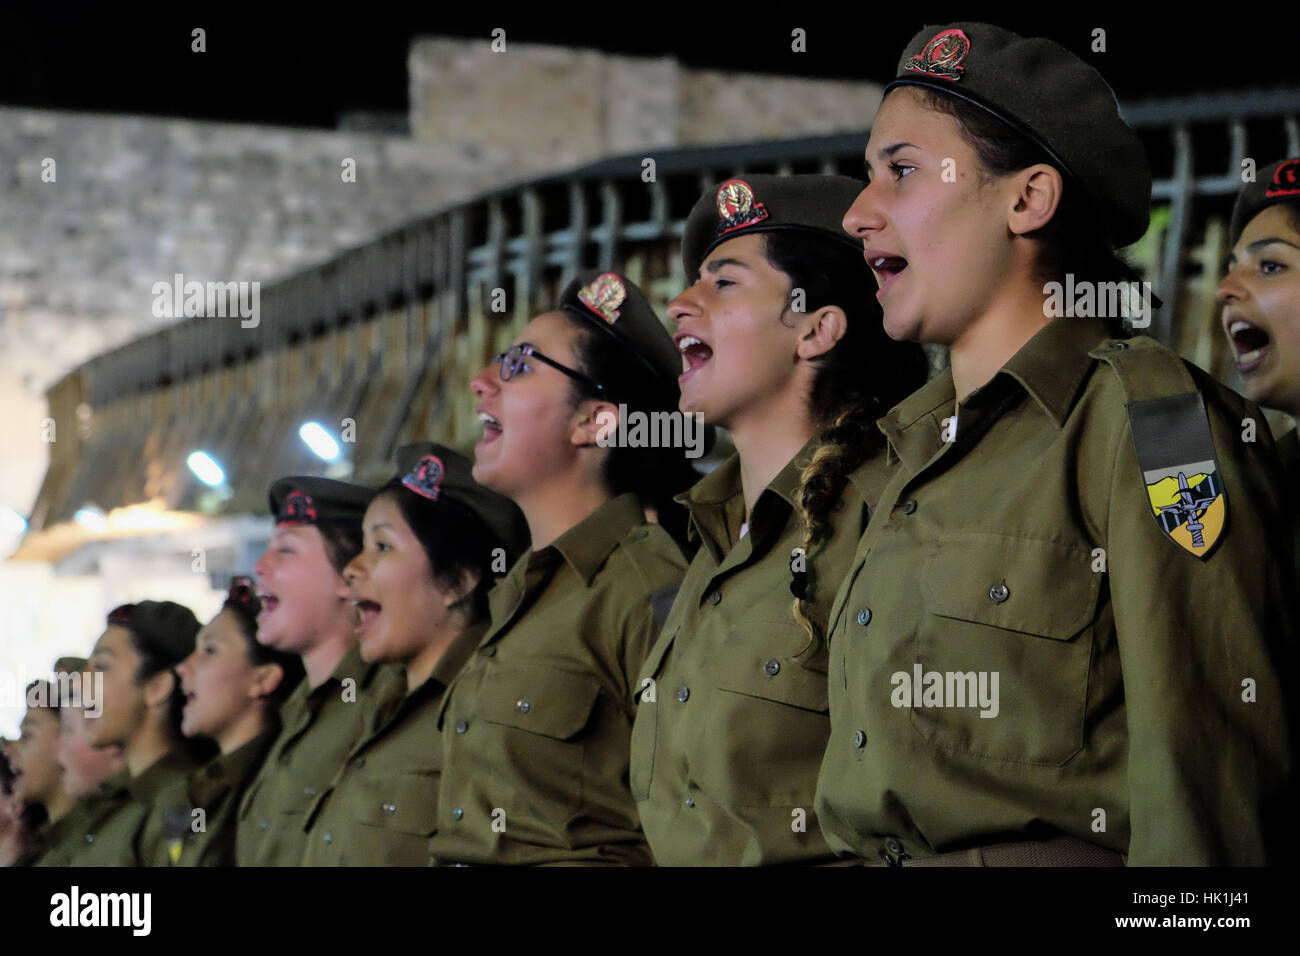 WestEnd Boards Israeli Female Army Comedy-Drama Series 'Dismissed